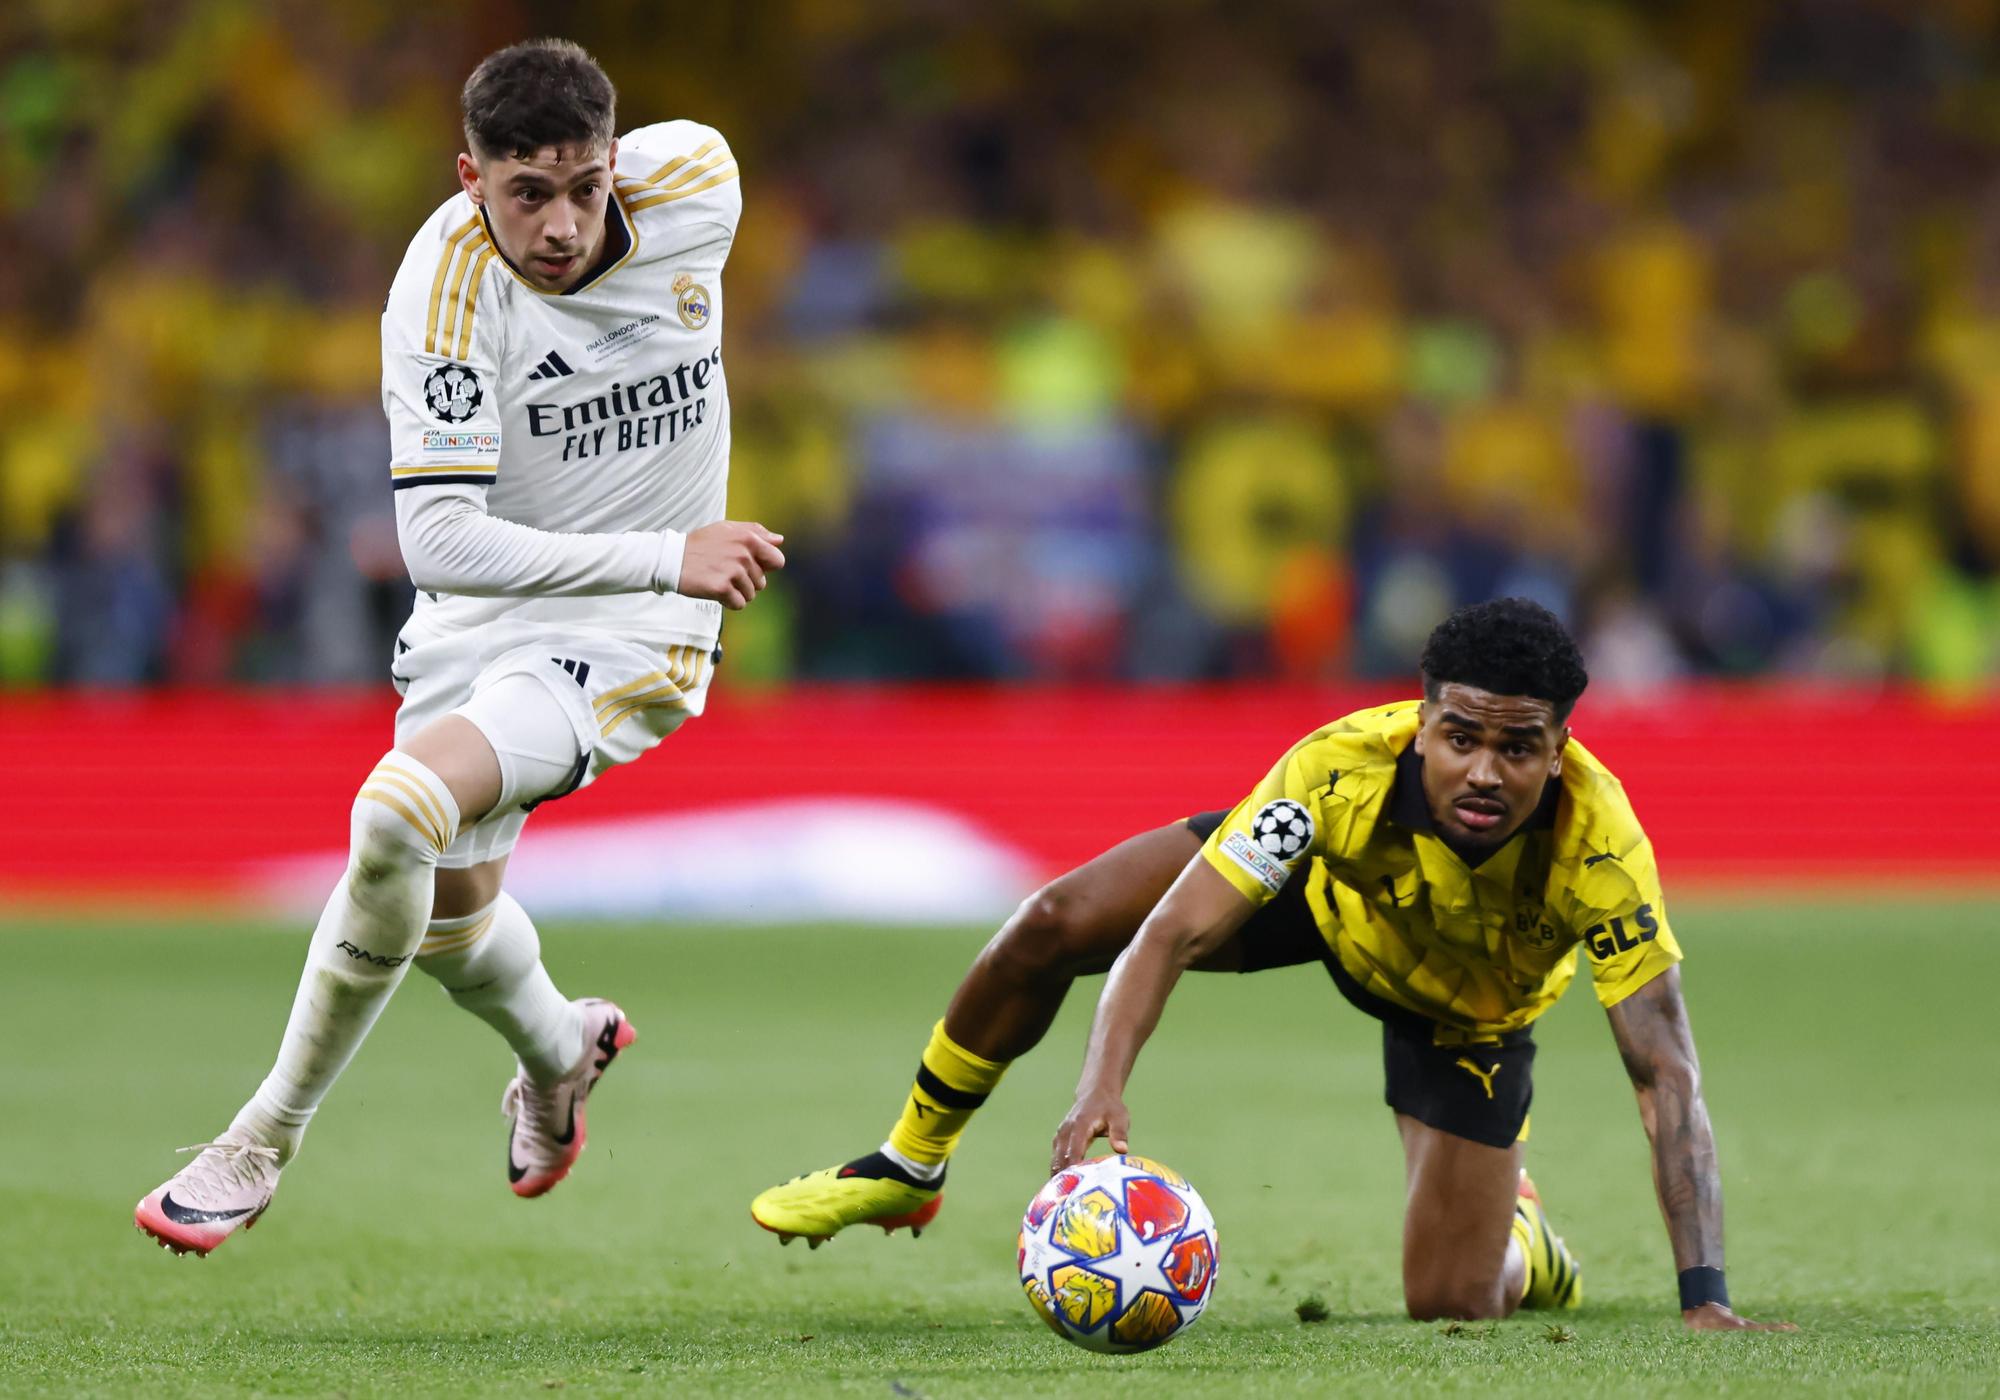 UEFA Champions League final - Borussia Dortmund vs Real Madrid